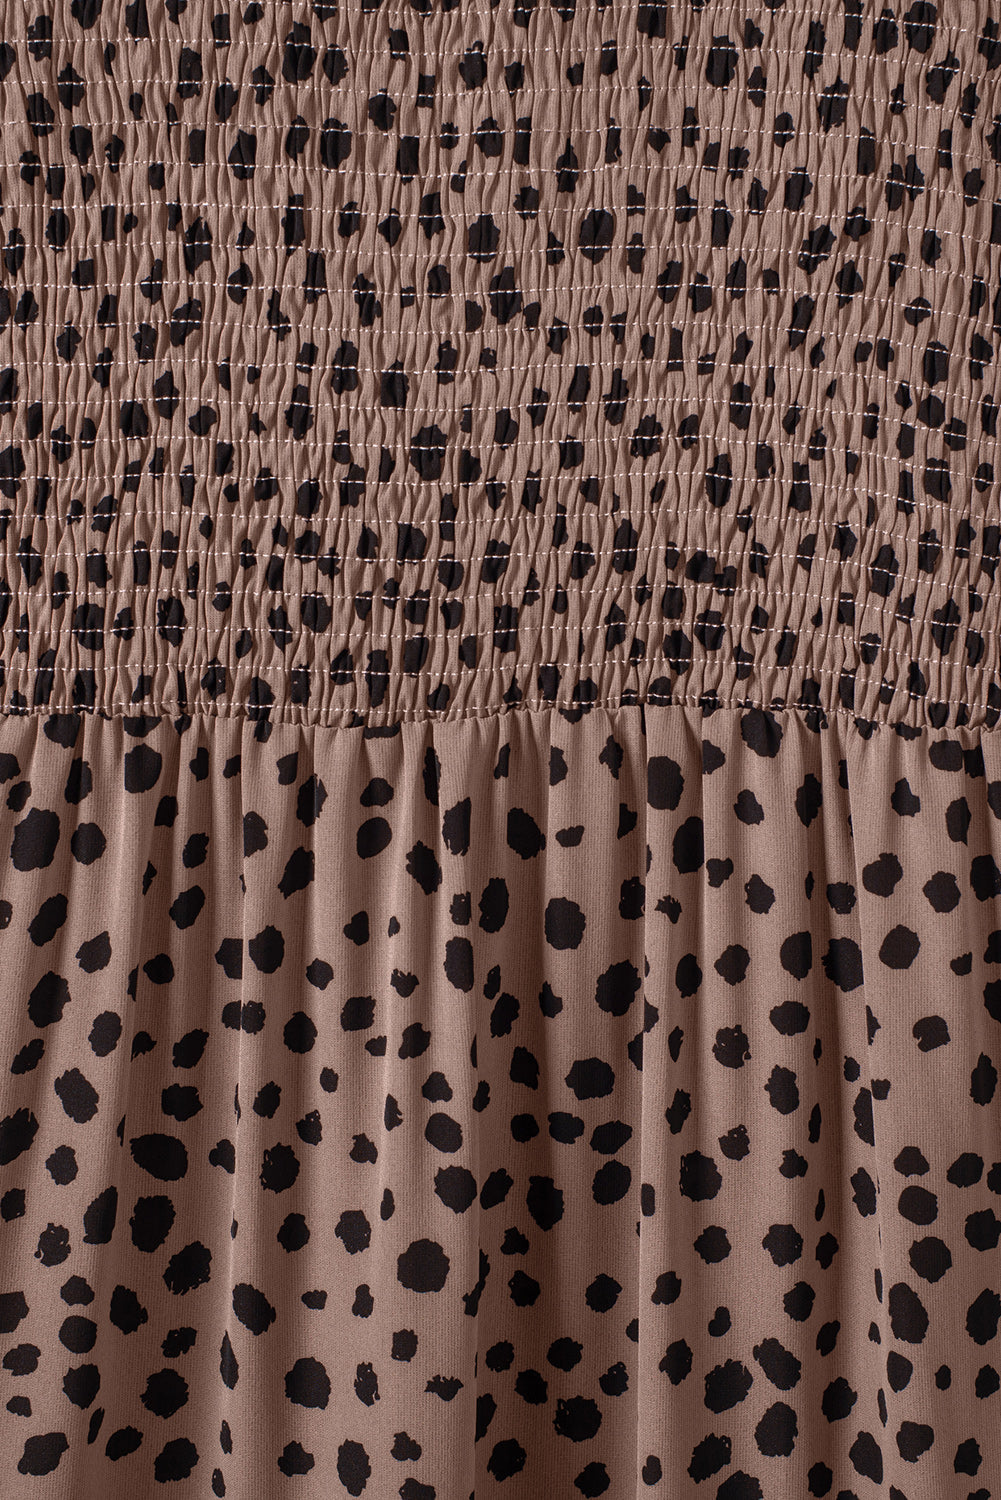 Pink Plus Size Leopard Print Smocked Tiered Dress